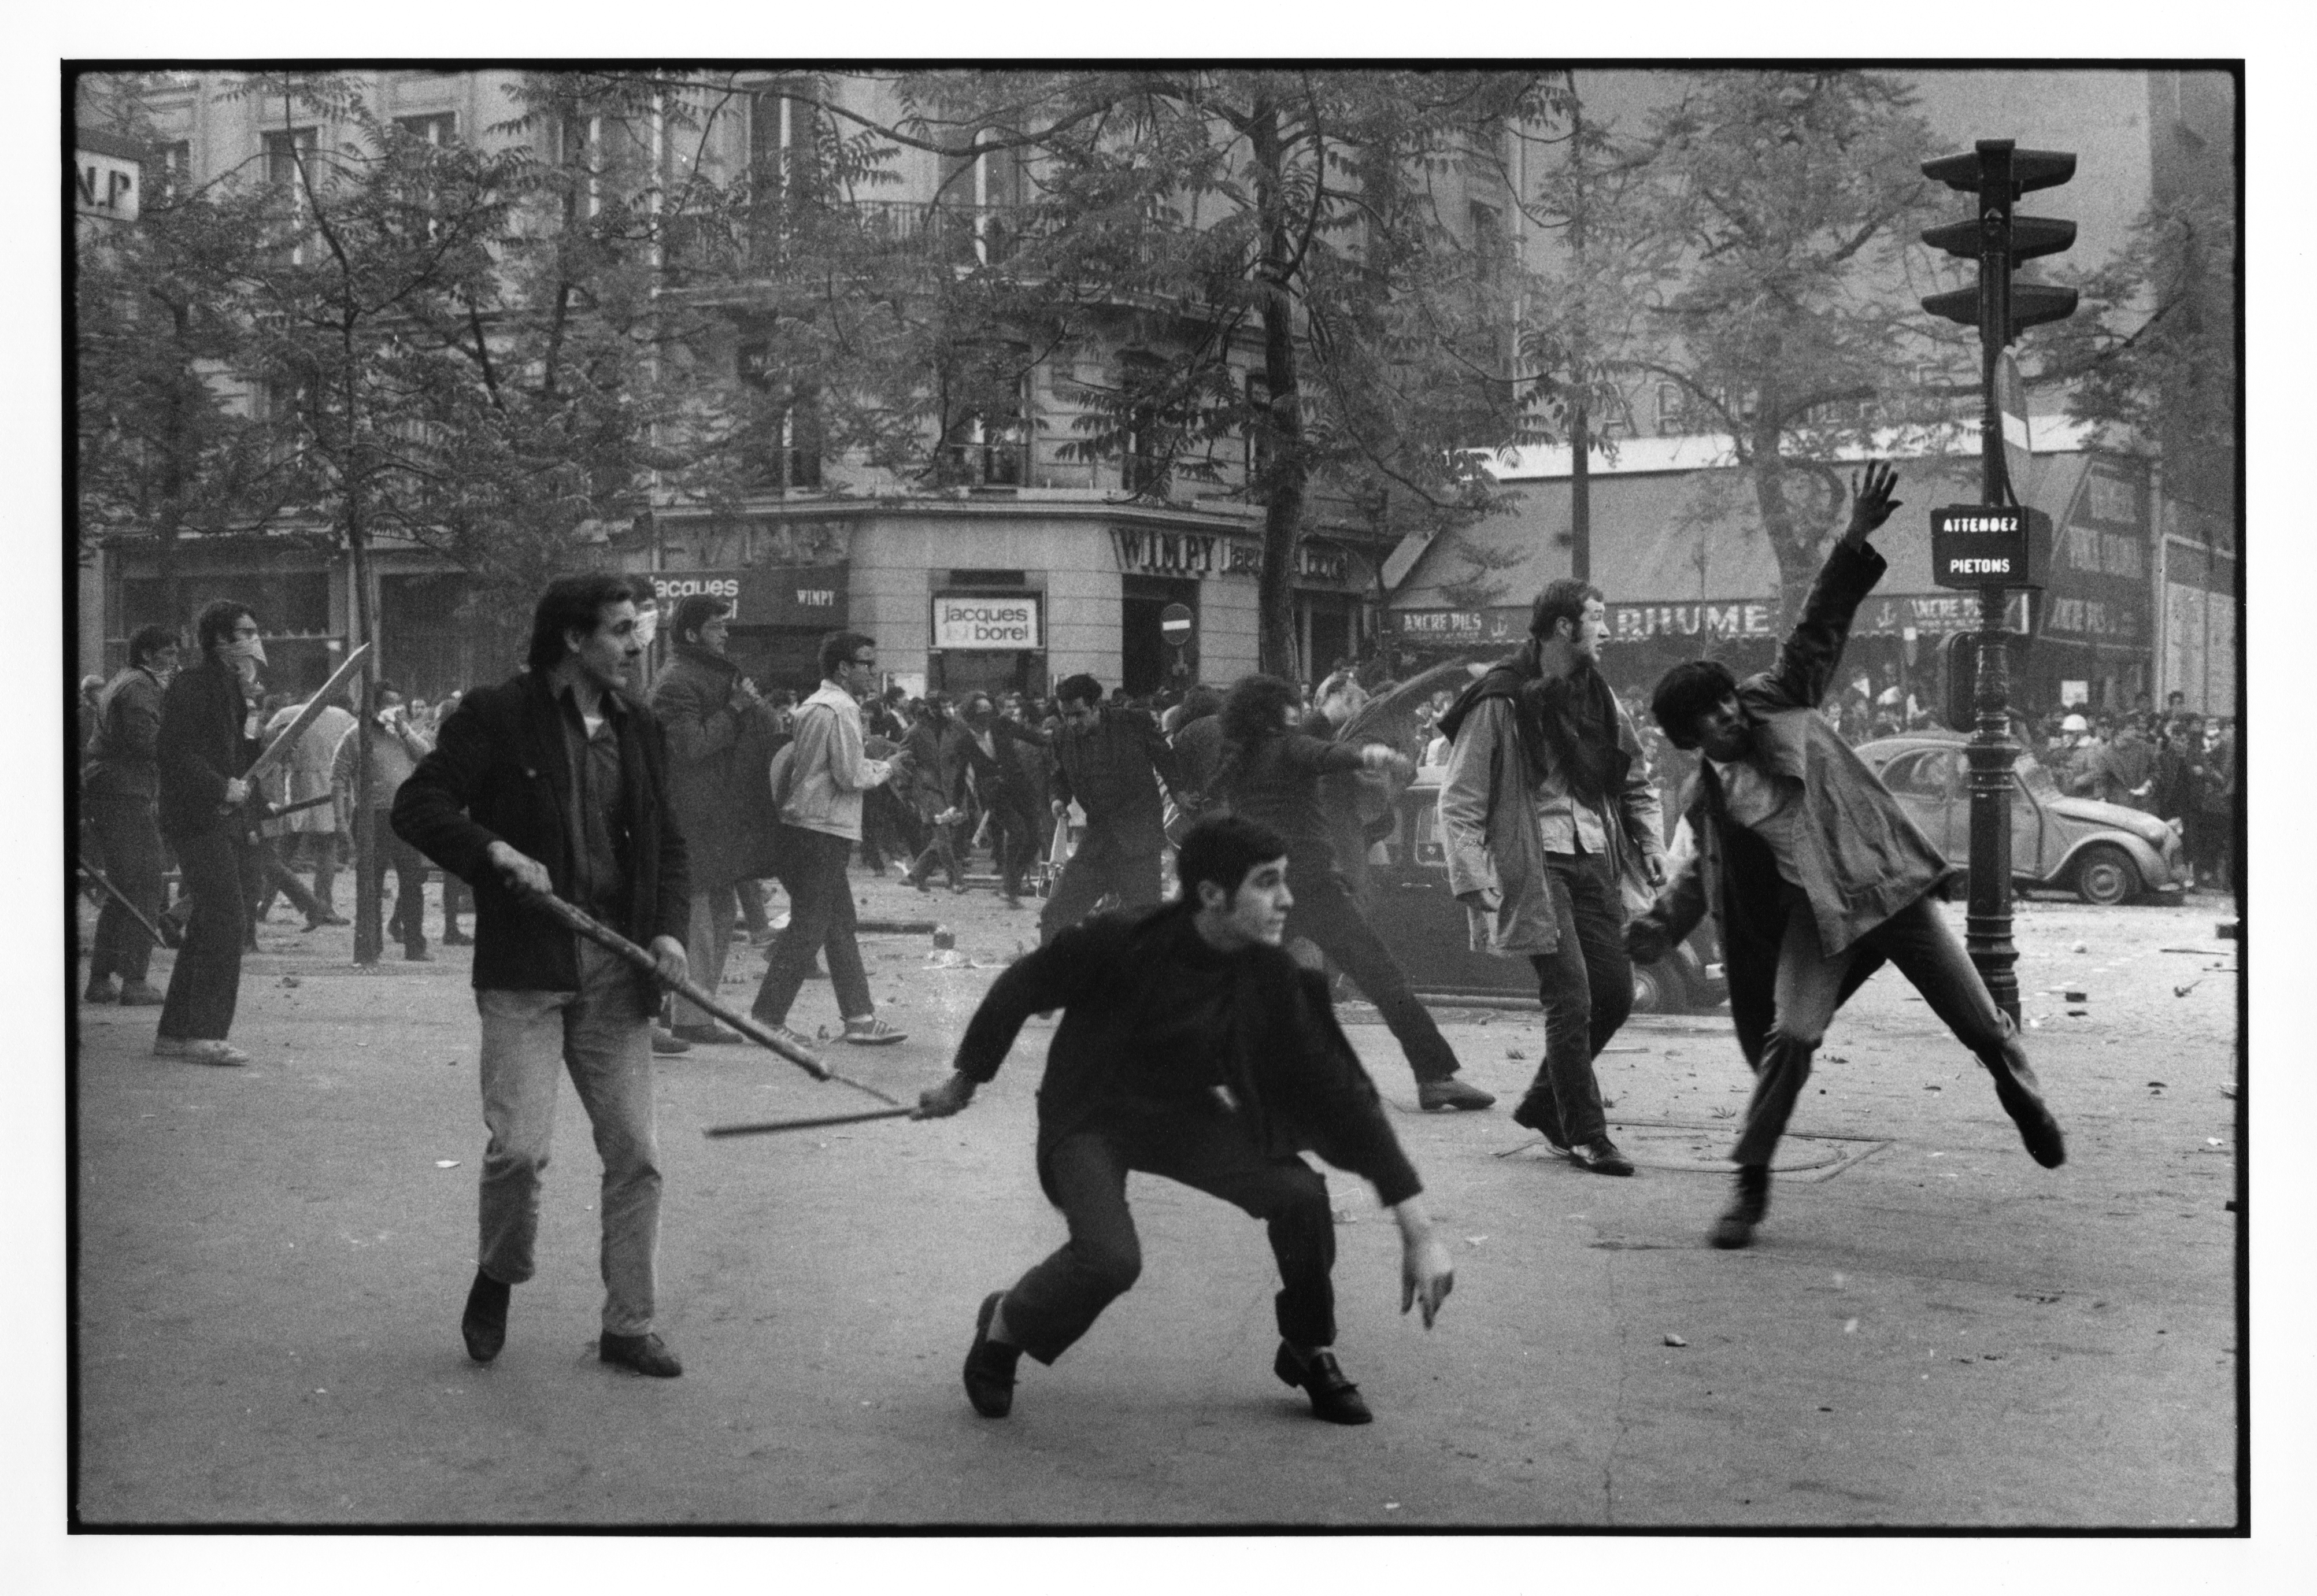 BRUNO BARBEY -  May 1968, Paris. 6th arrondissement. Boulevard Saint Germain. Students hurling projectiles against the police. Vintage silver gelatine print © BRUNO BARBEY